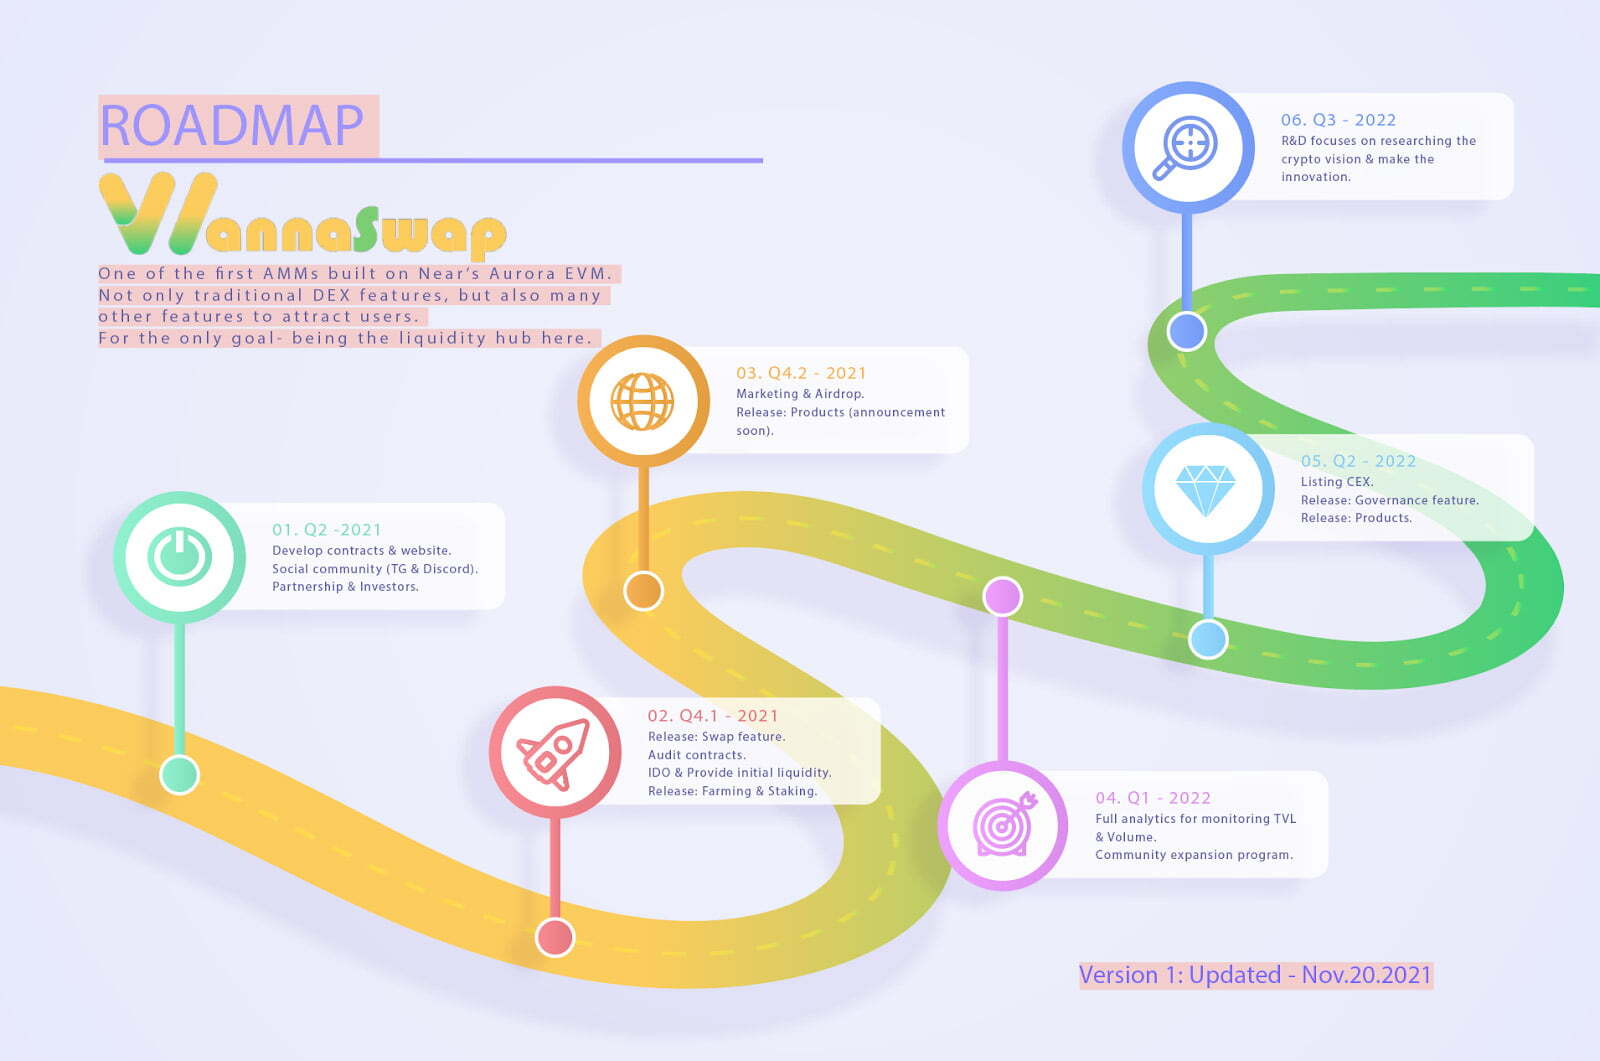 Roadmap WannaSwap